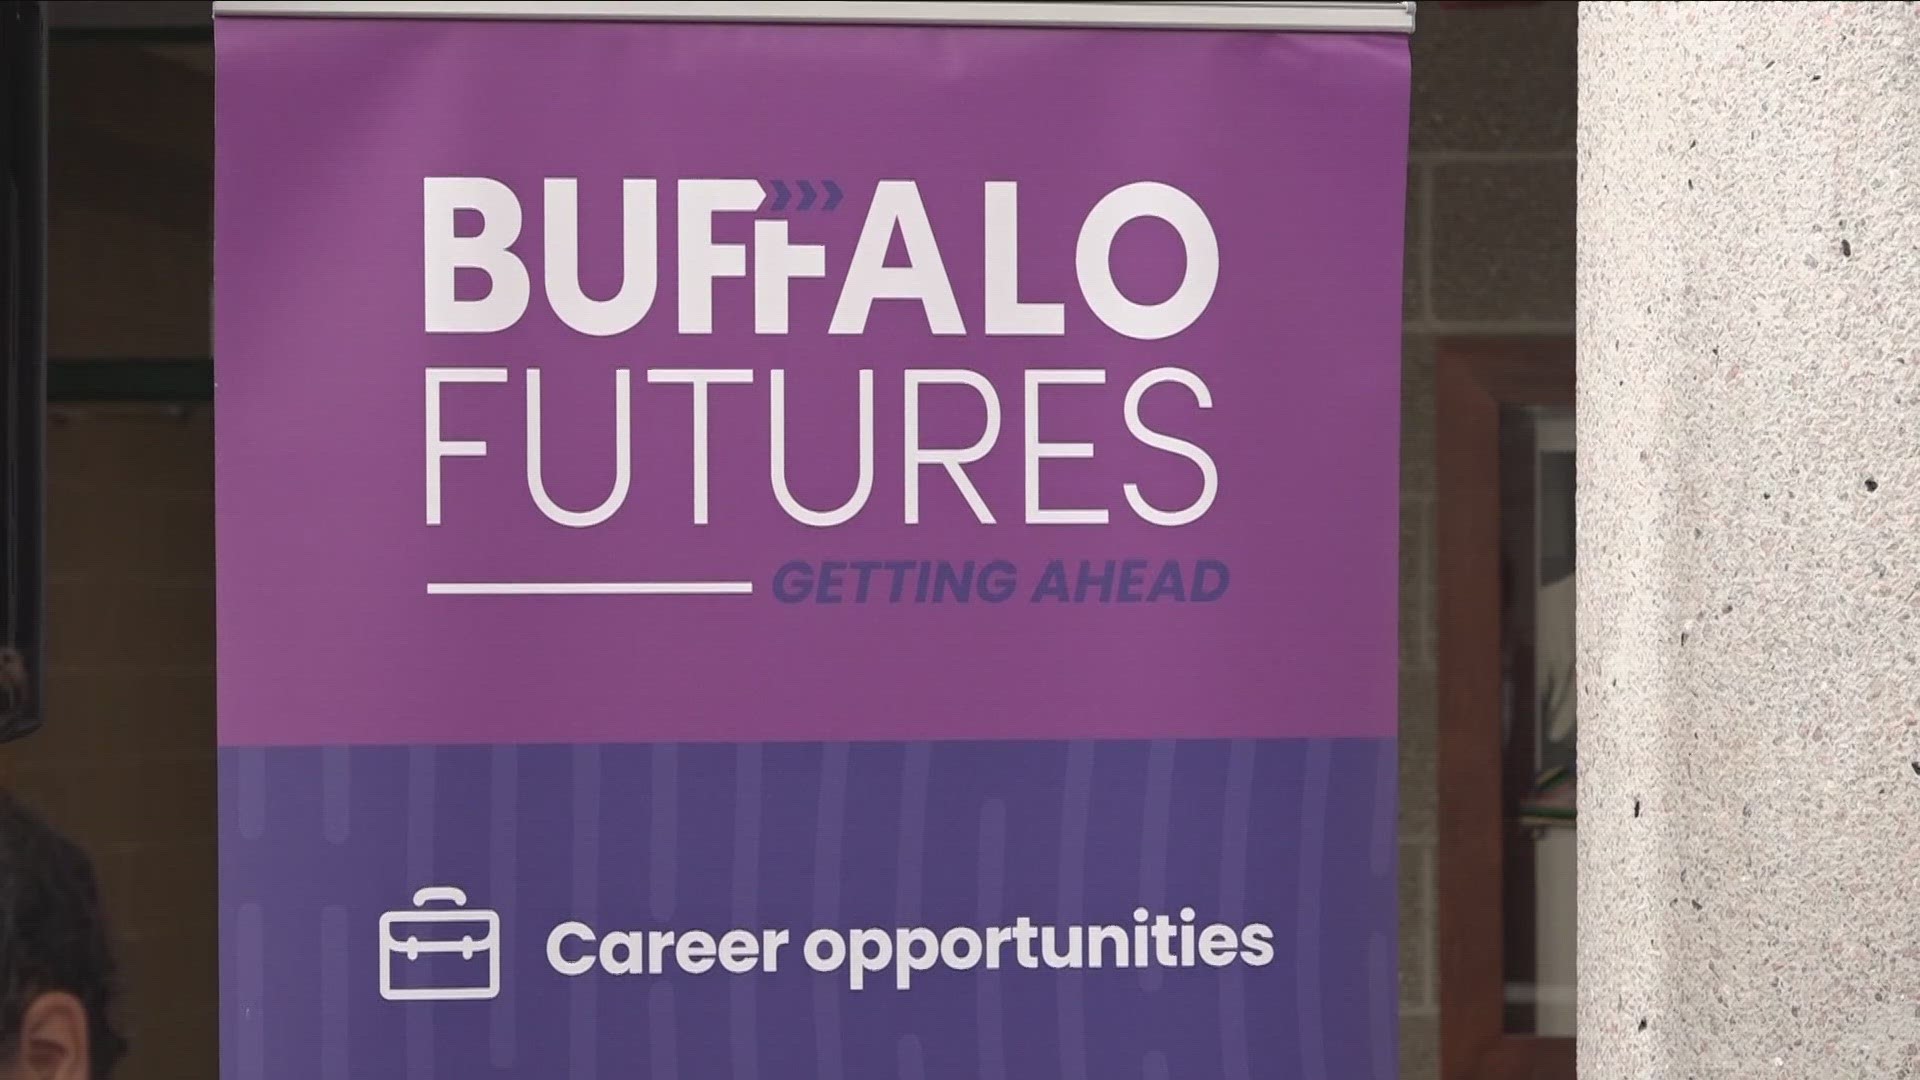 It's steady as she goes for the Buffalo Niagara job market